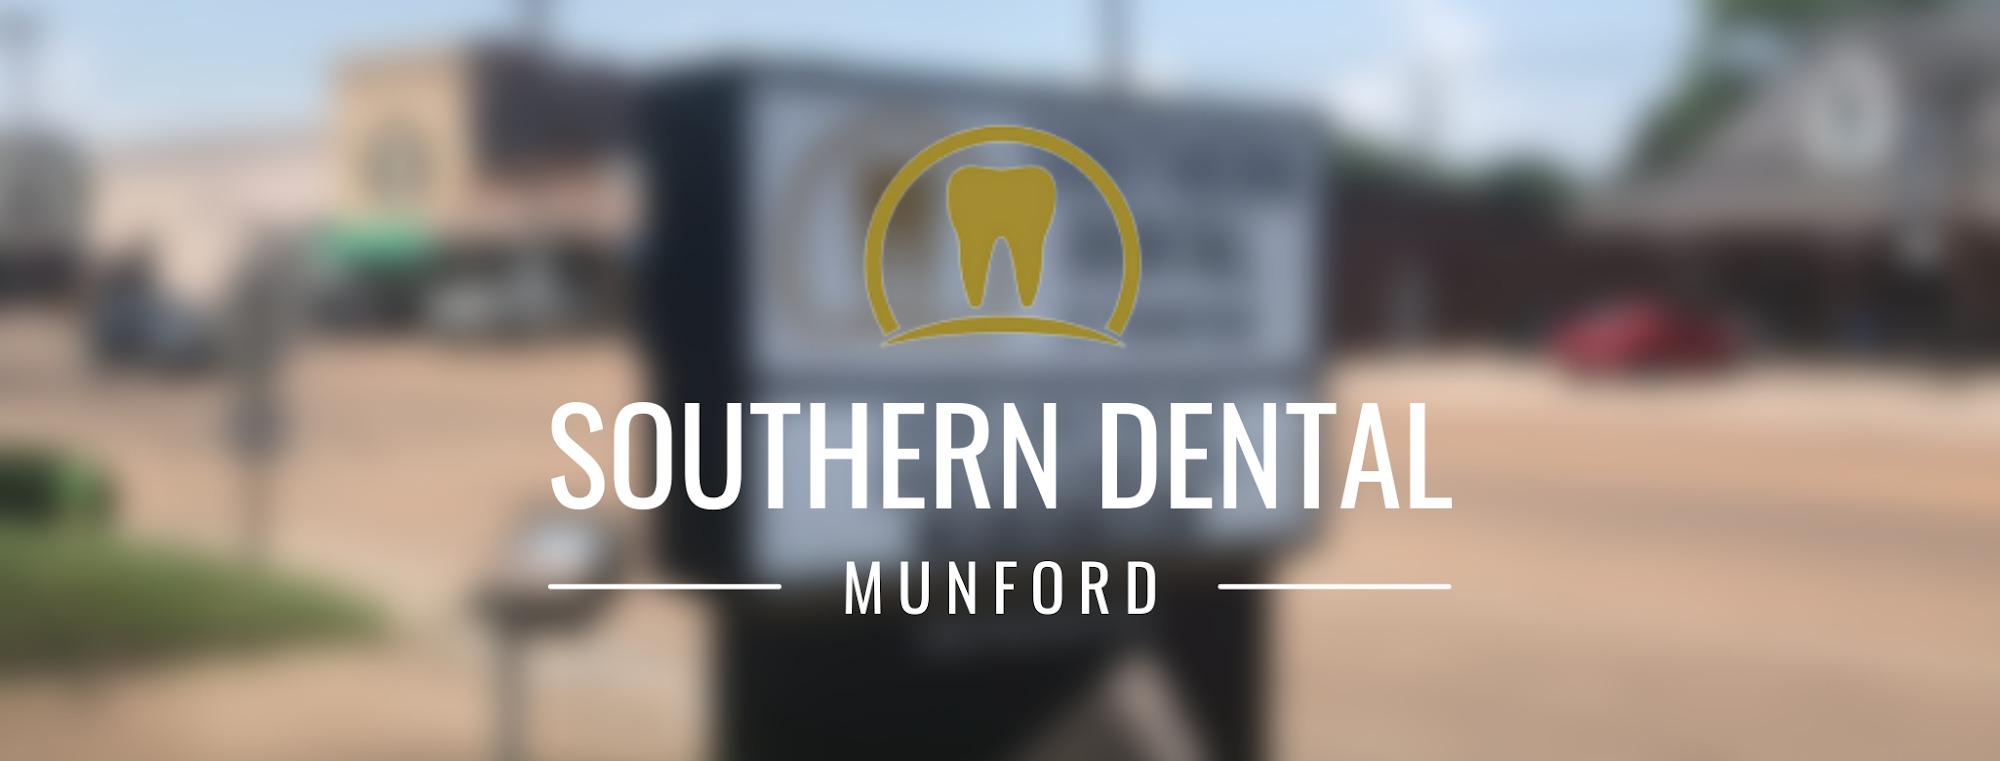 Southern Dental Munford